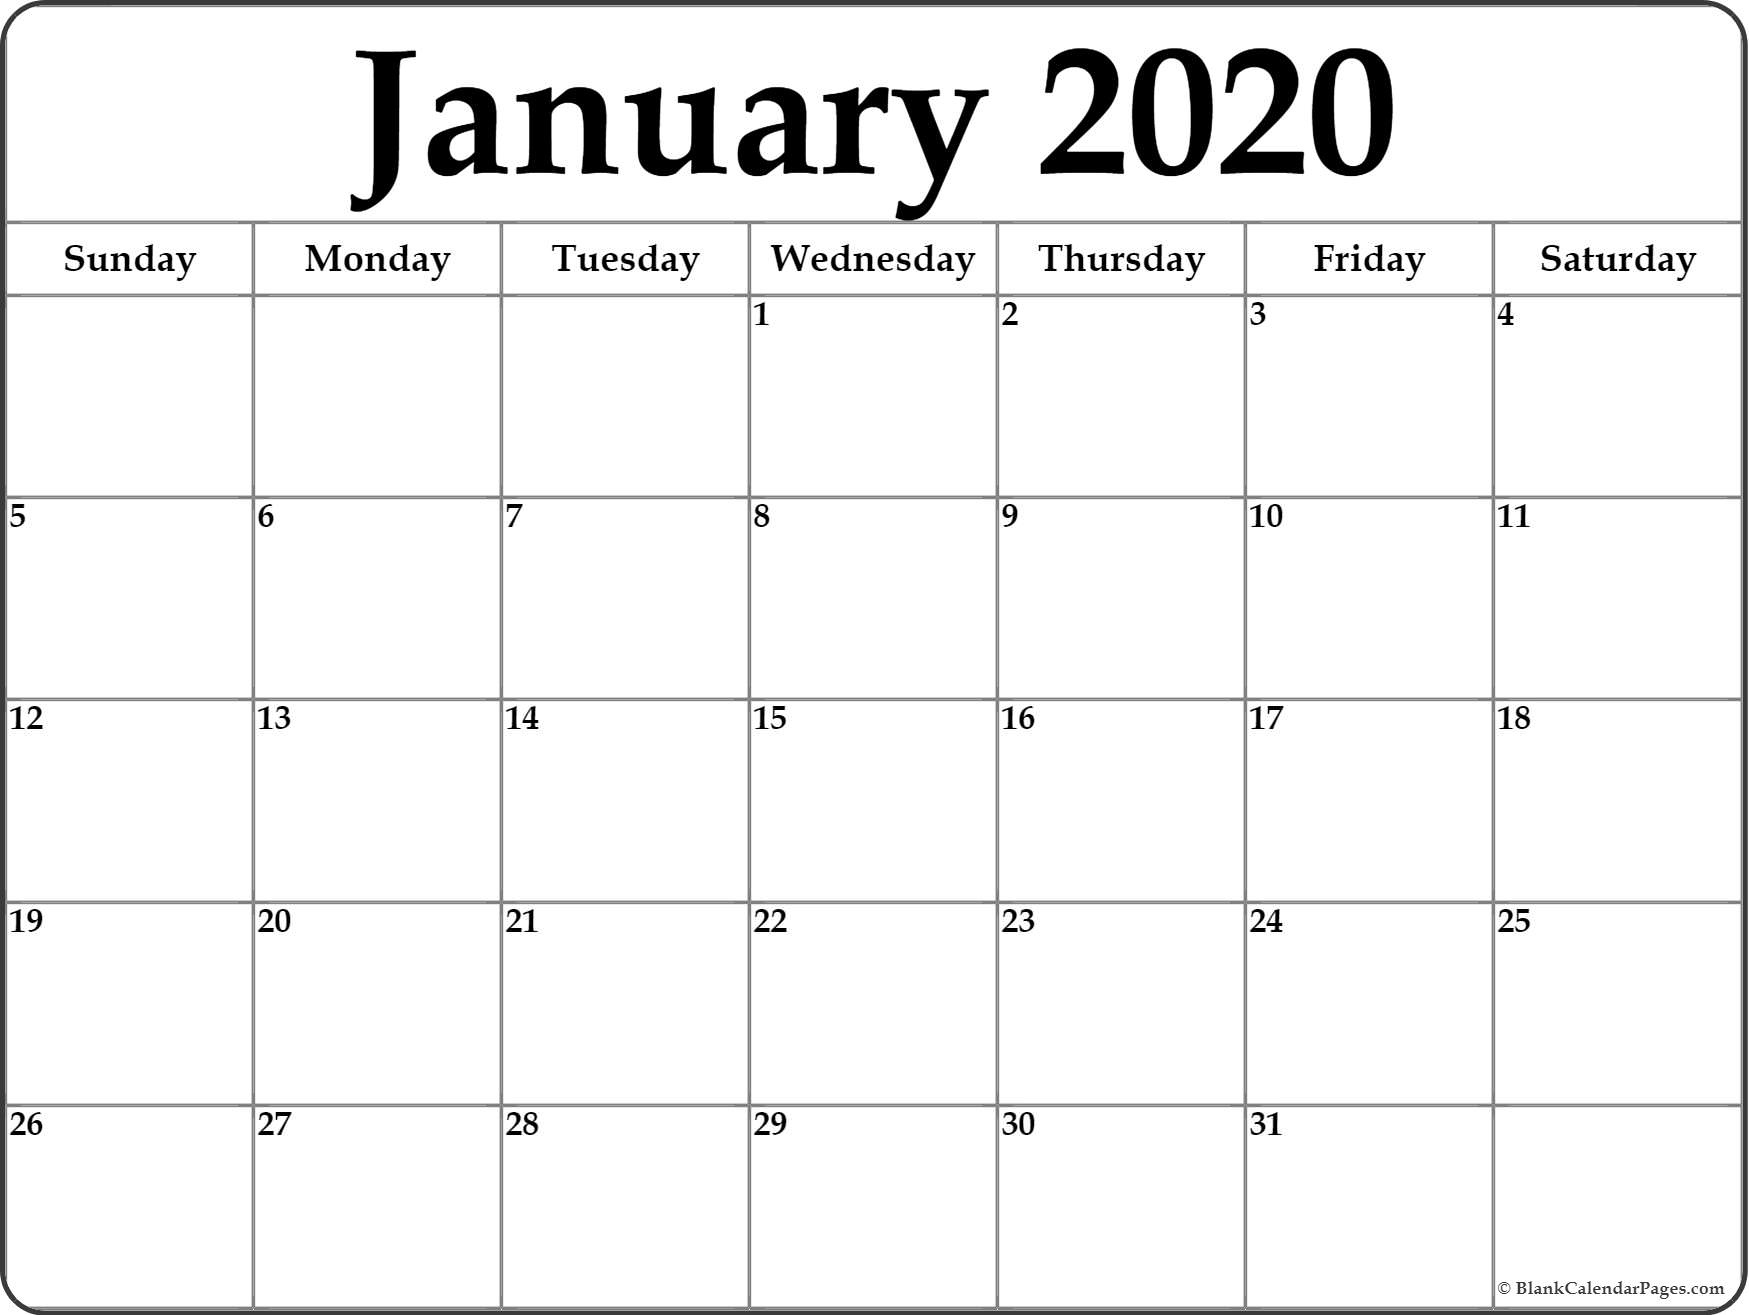 January 2020 Calendar | Free Printable Monthly Calendars January 2020 Calendar Printable Free